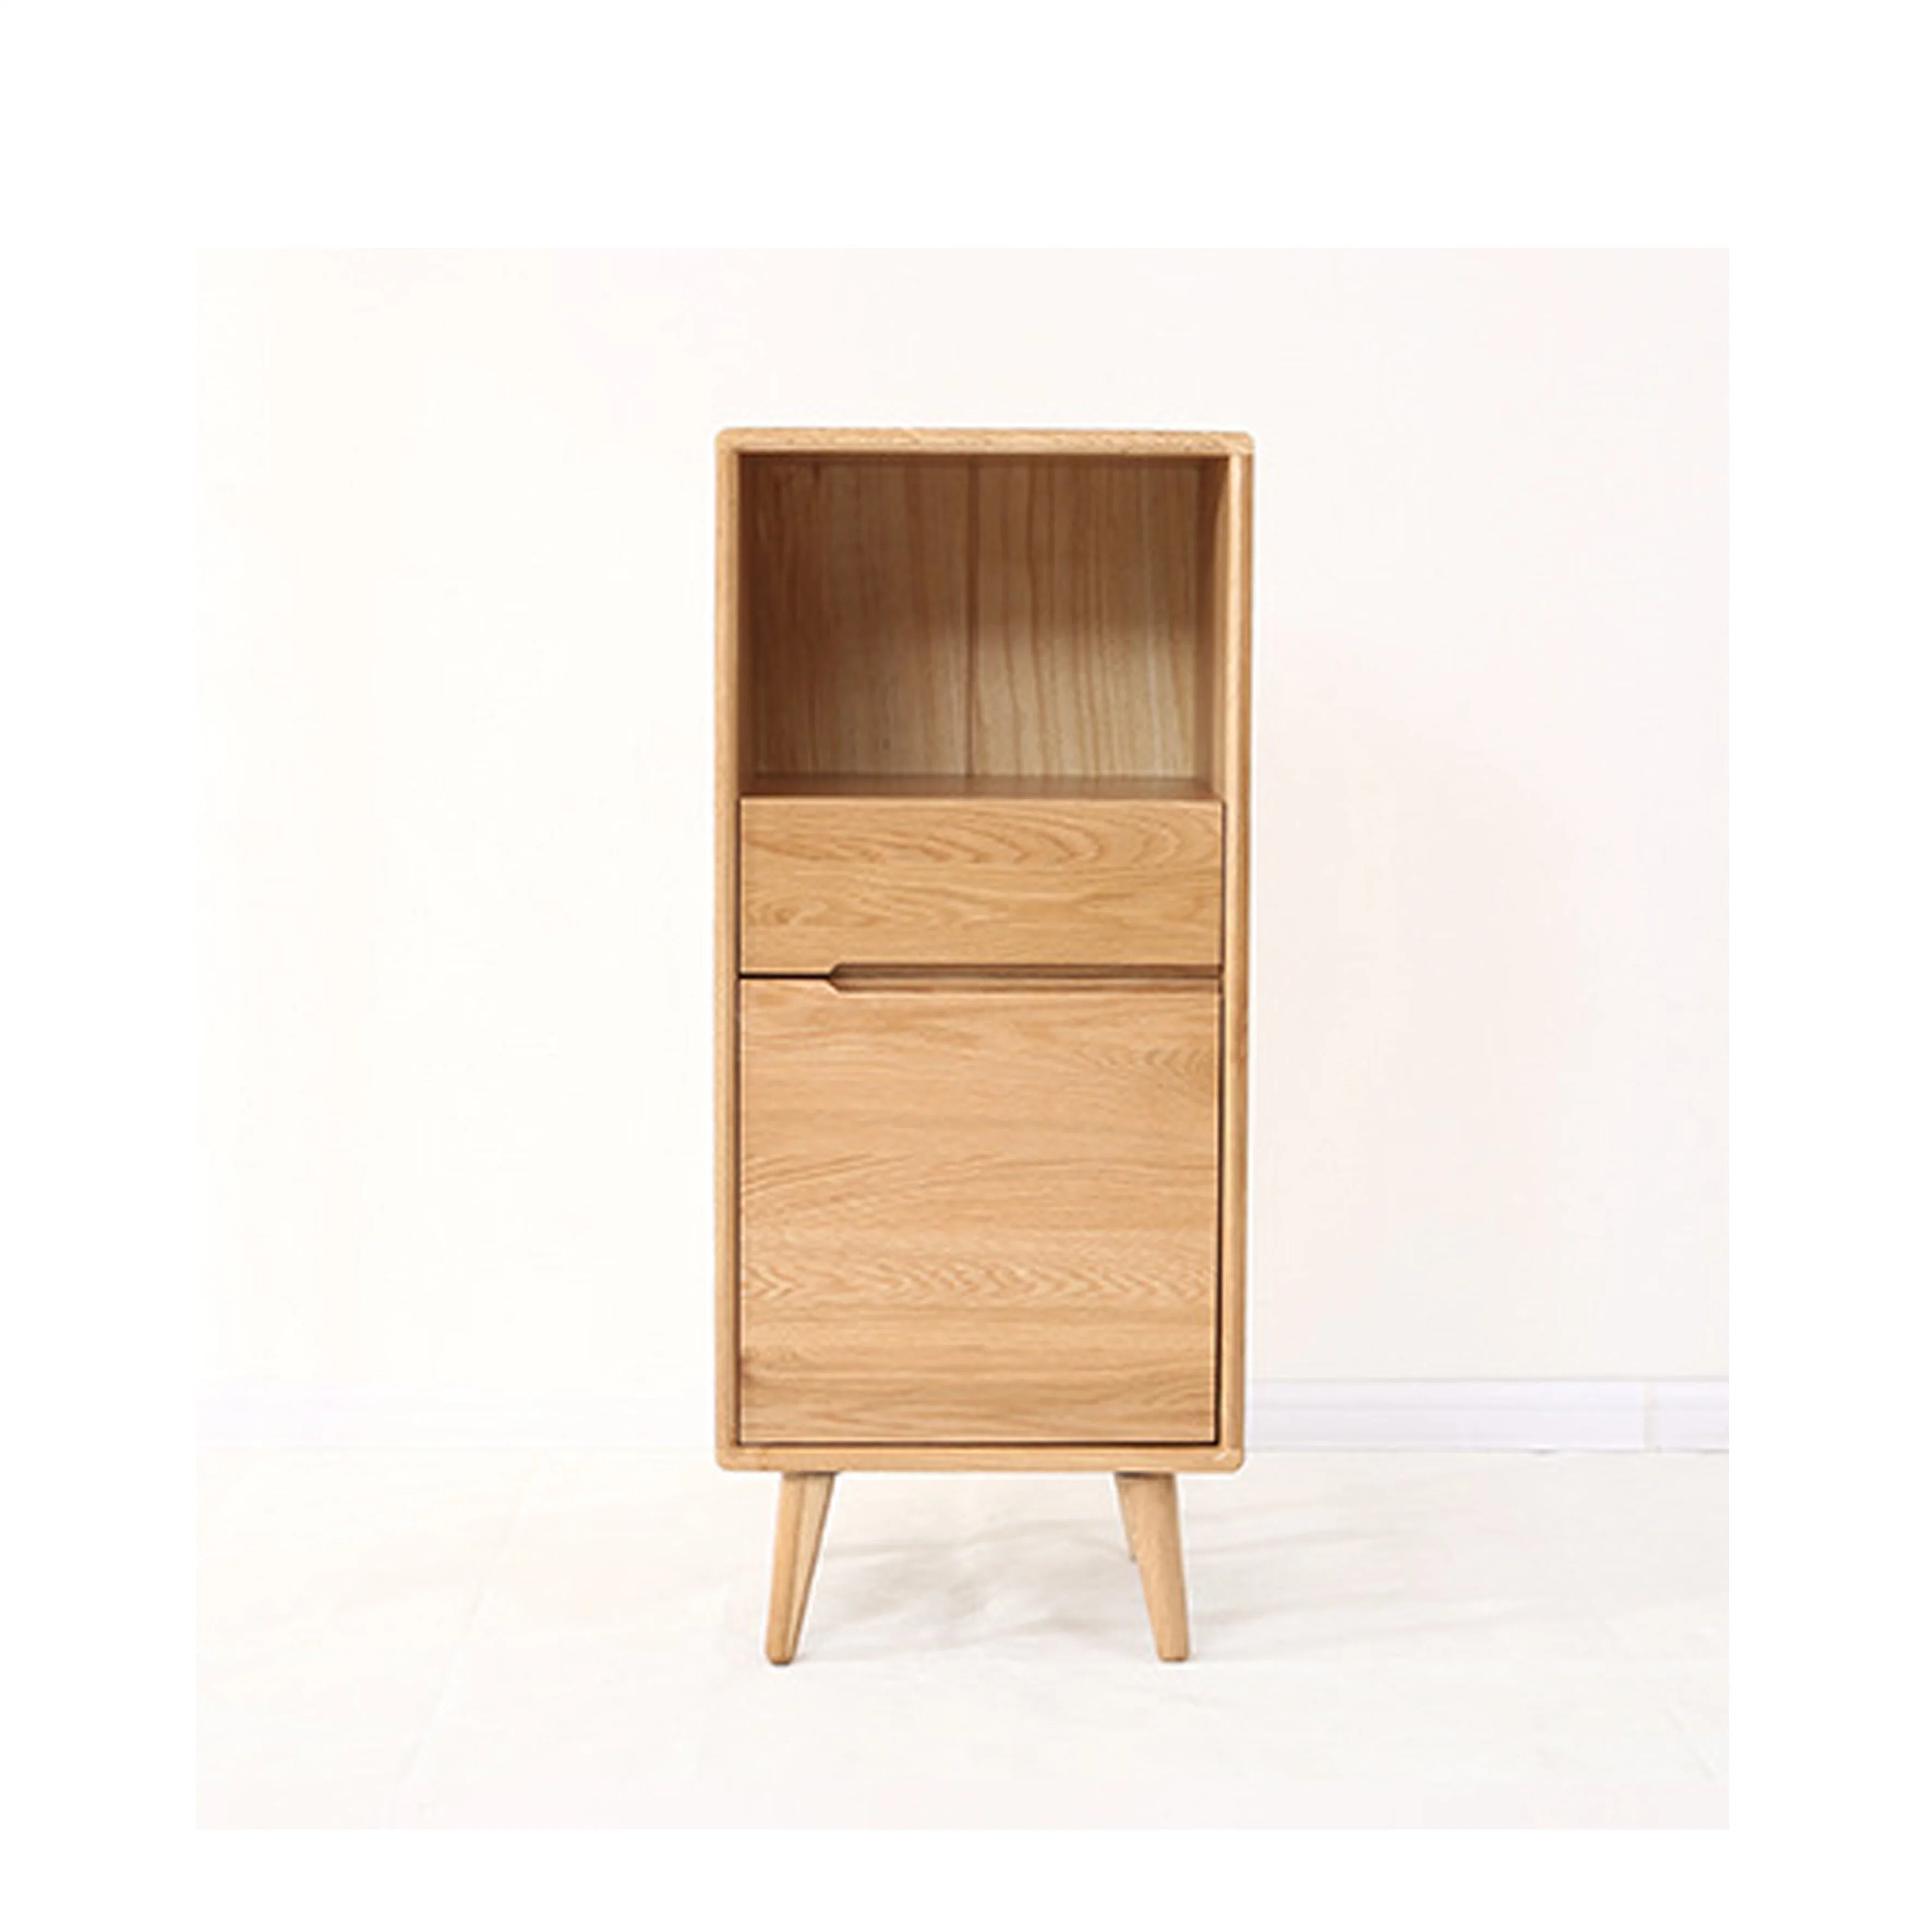 American Solid Wood Bookcase Neoclassical Country Study Furniture White Oak Bookshelf